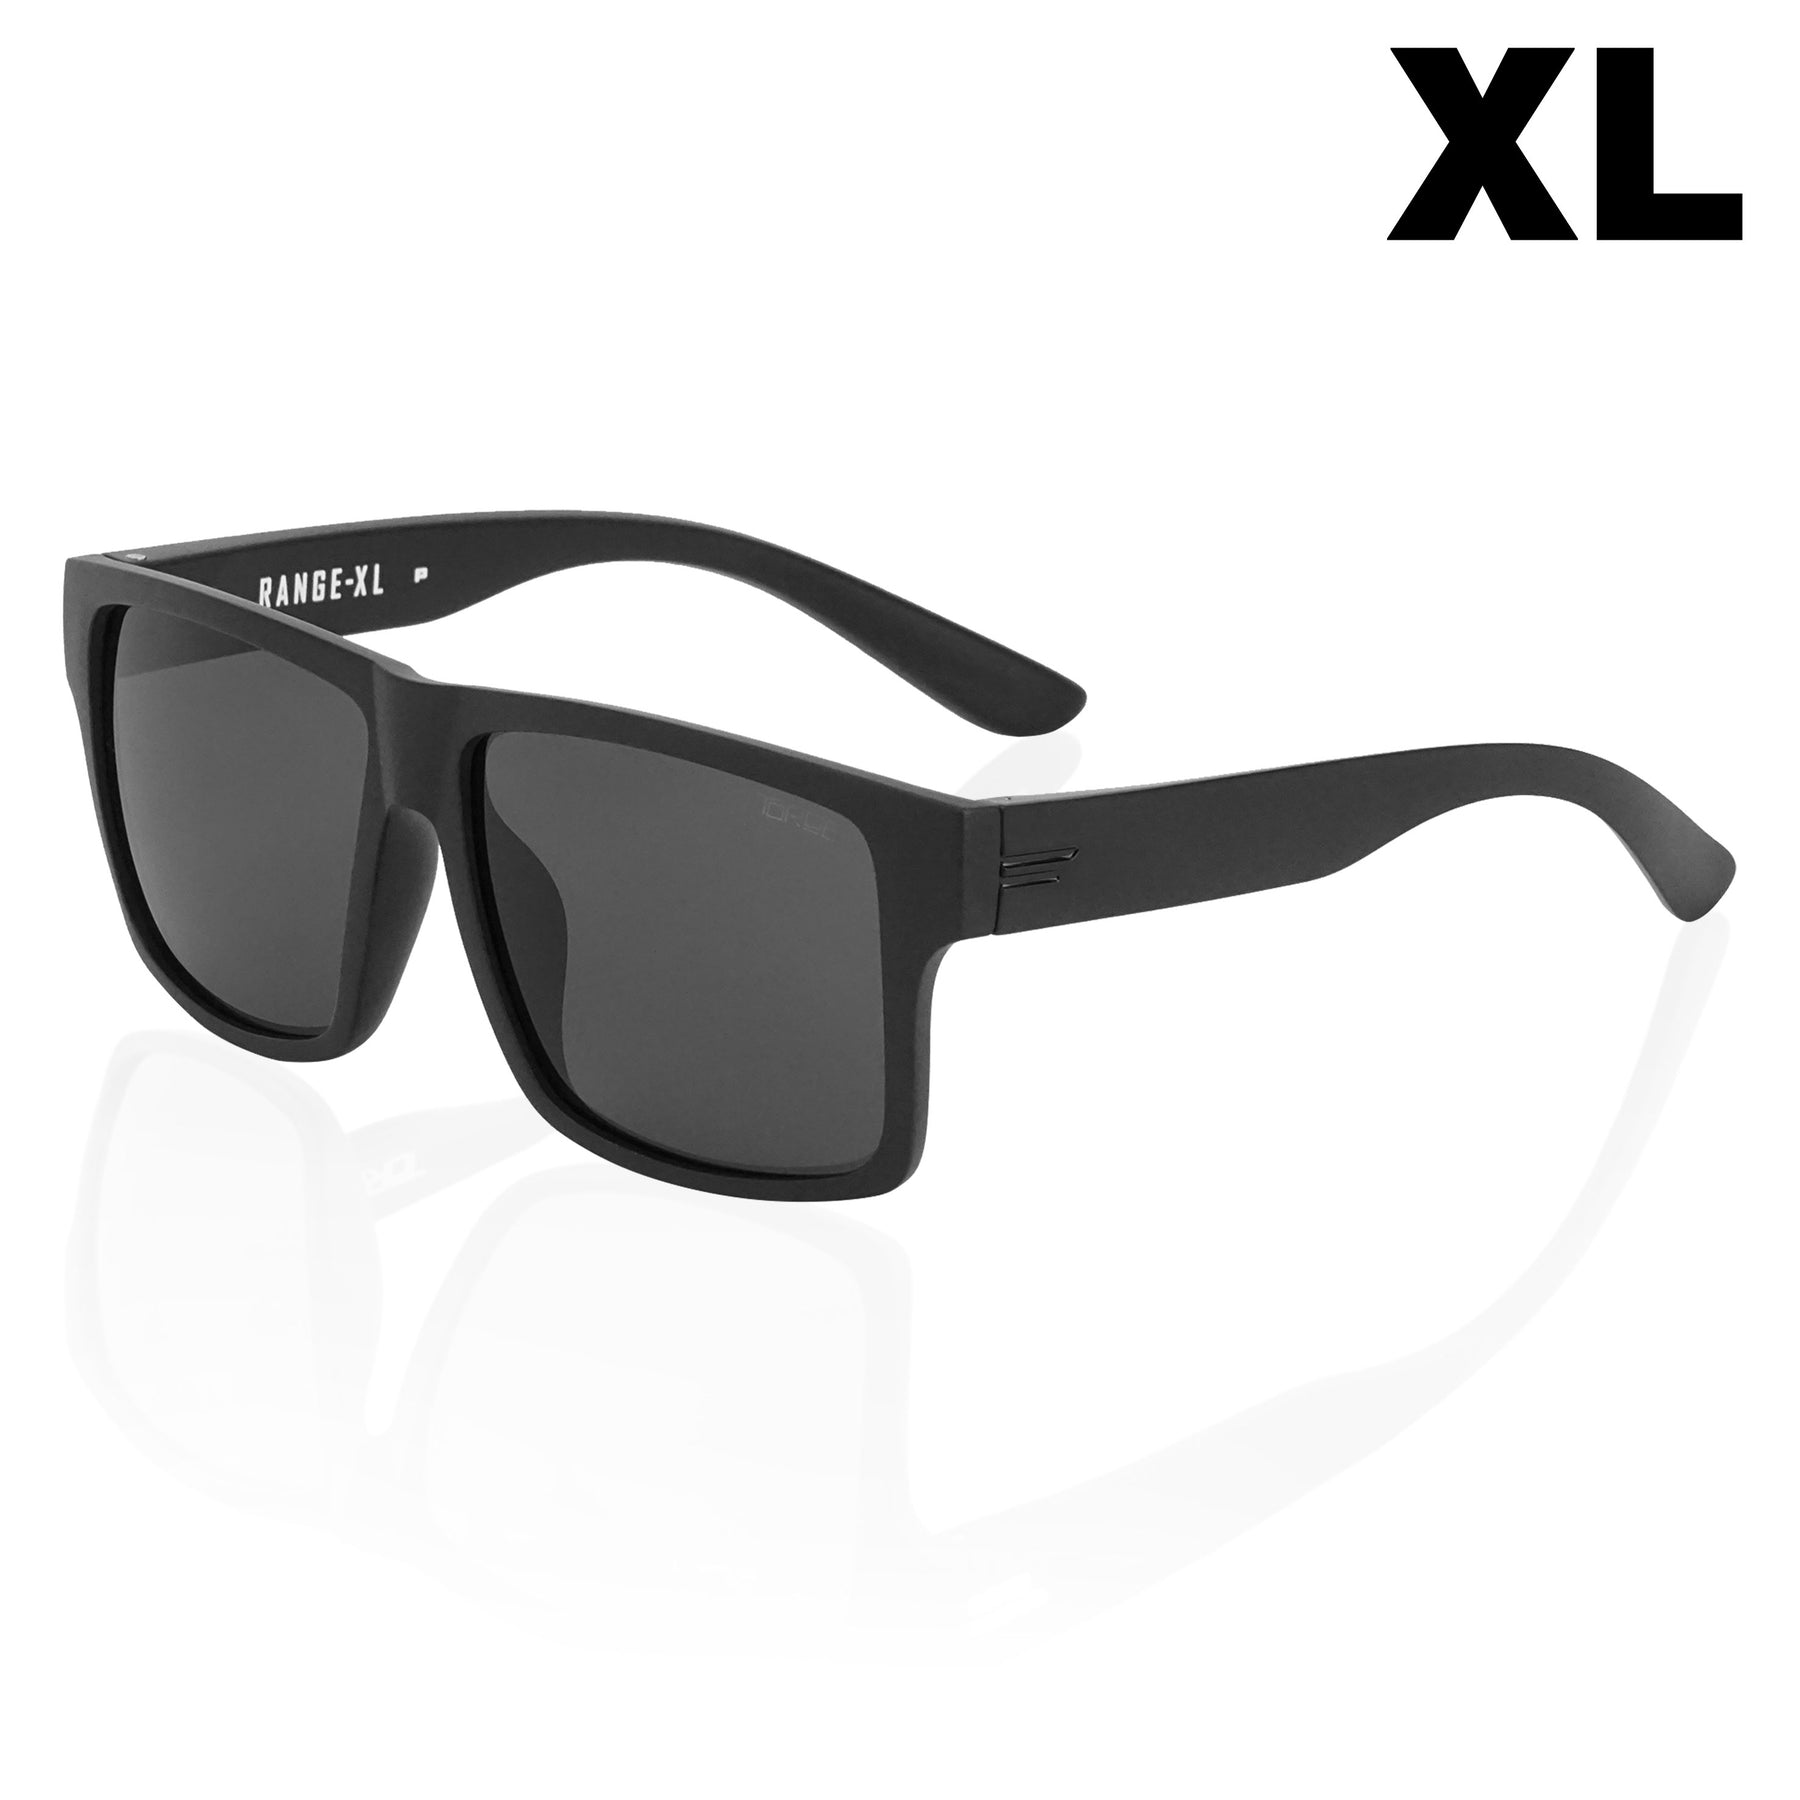 Extra-Large Range XL Polarized Sunglasses for Big Dawgs Matte Black / Black / Silver Mirror Lens